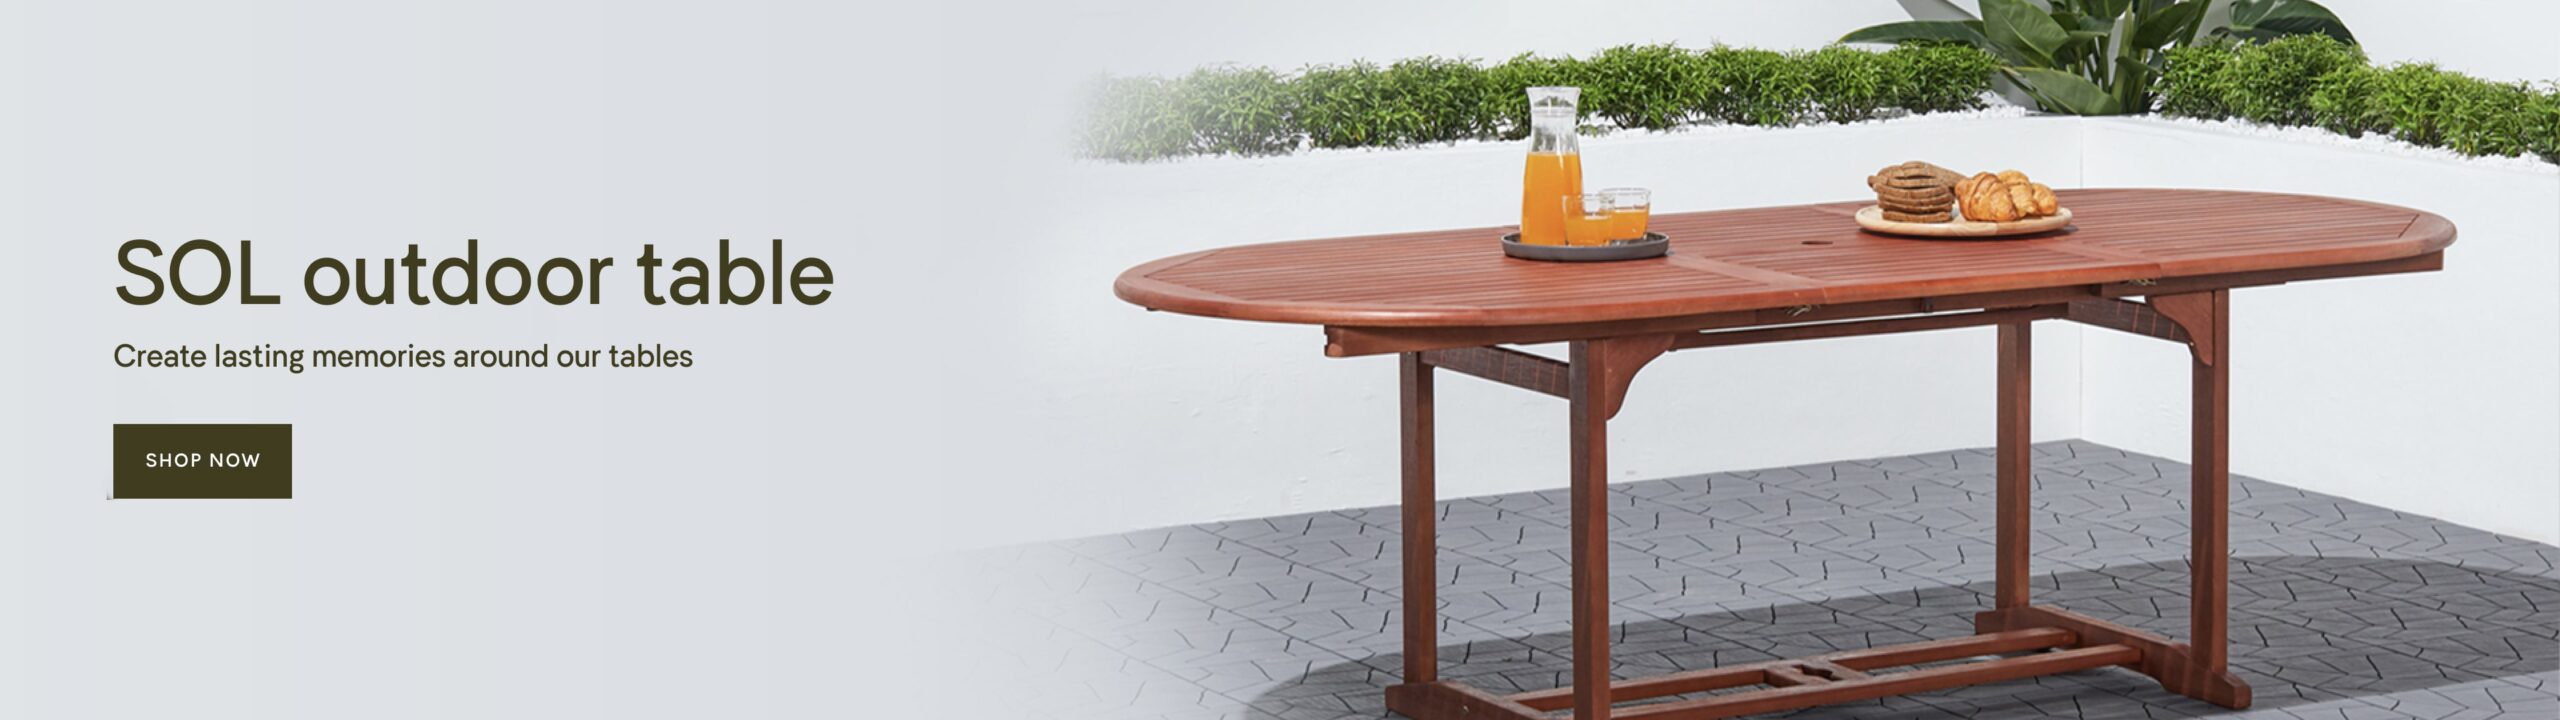 SOL outdoor table